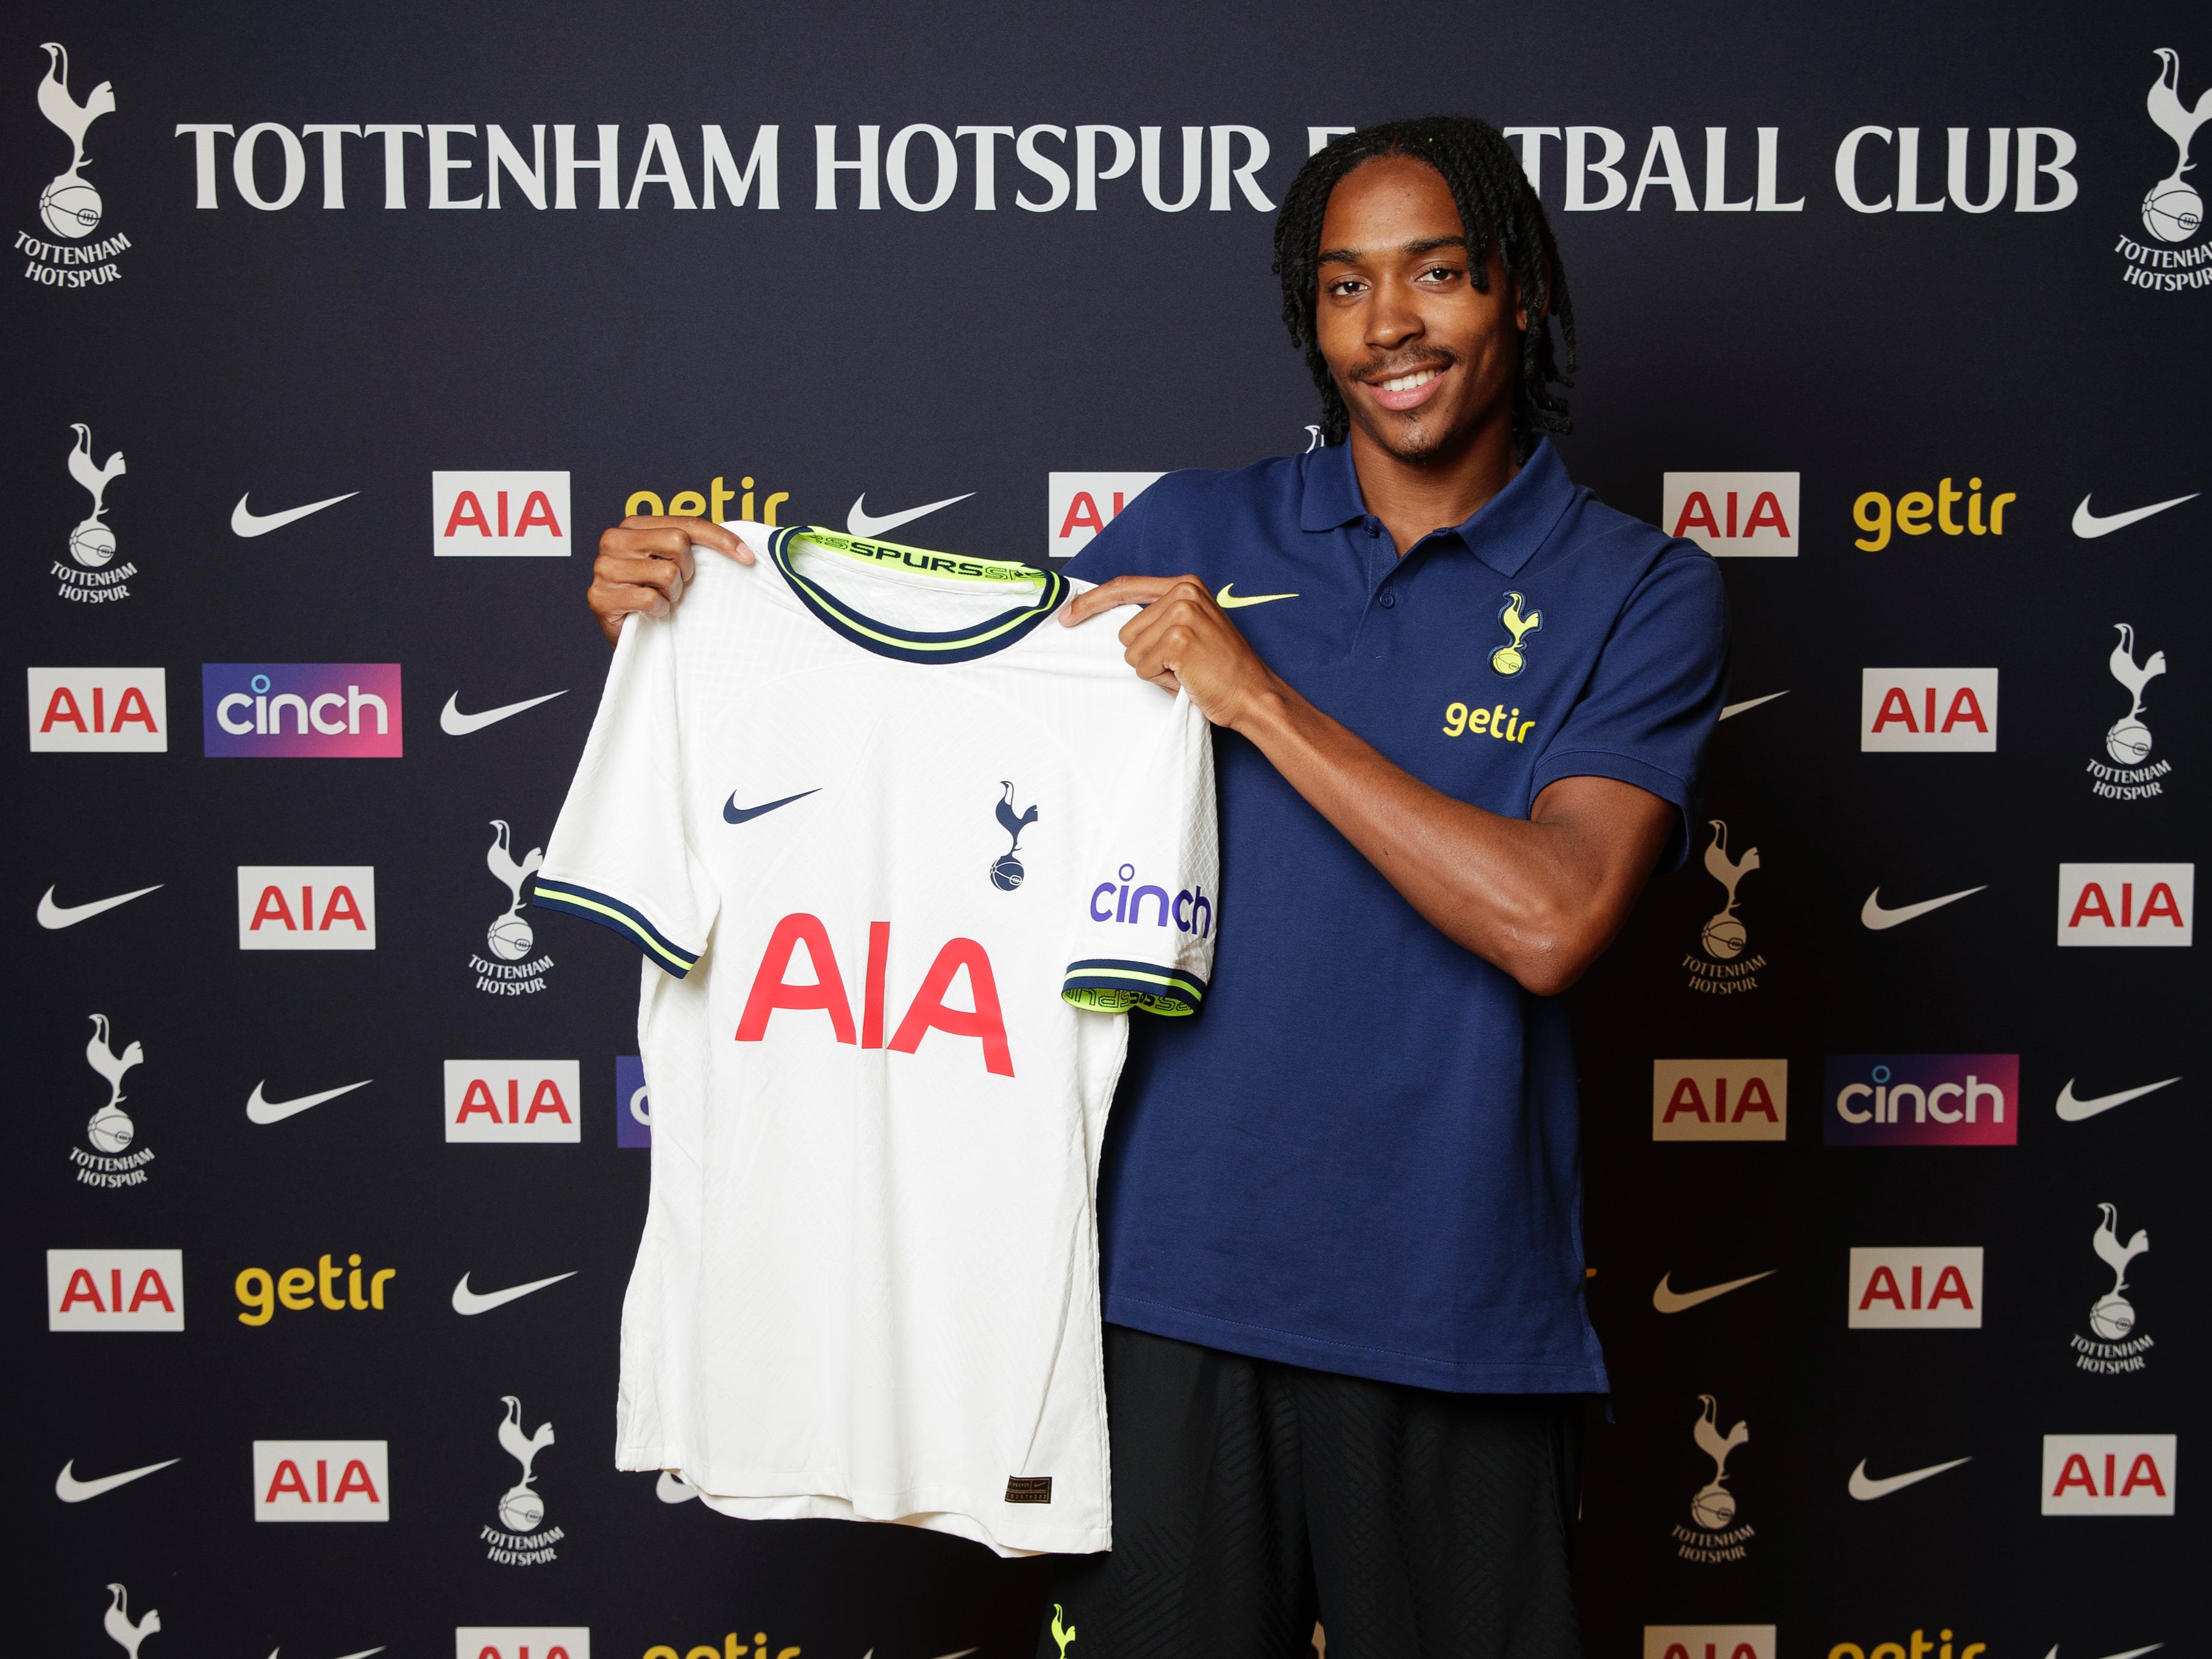 London-born Spence has long been on Tottenham’s radar